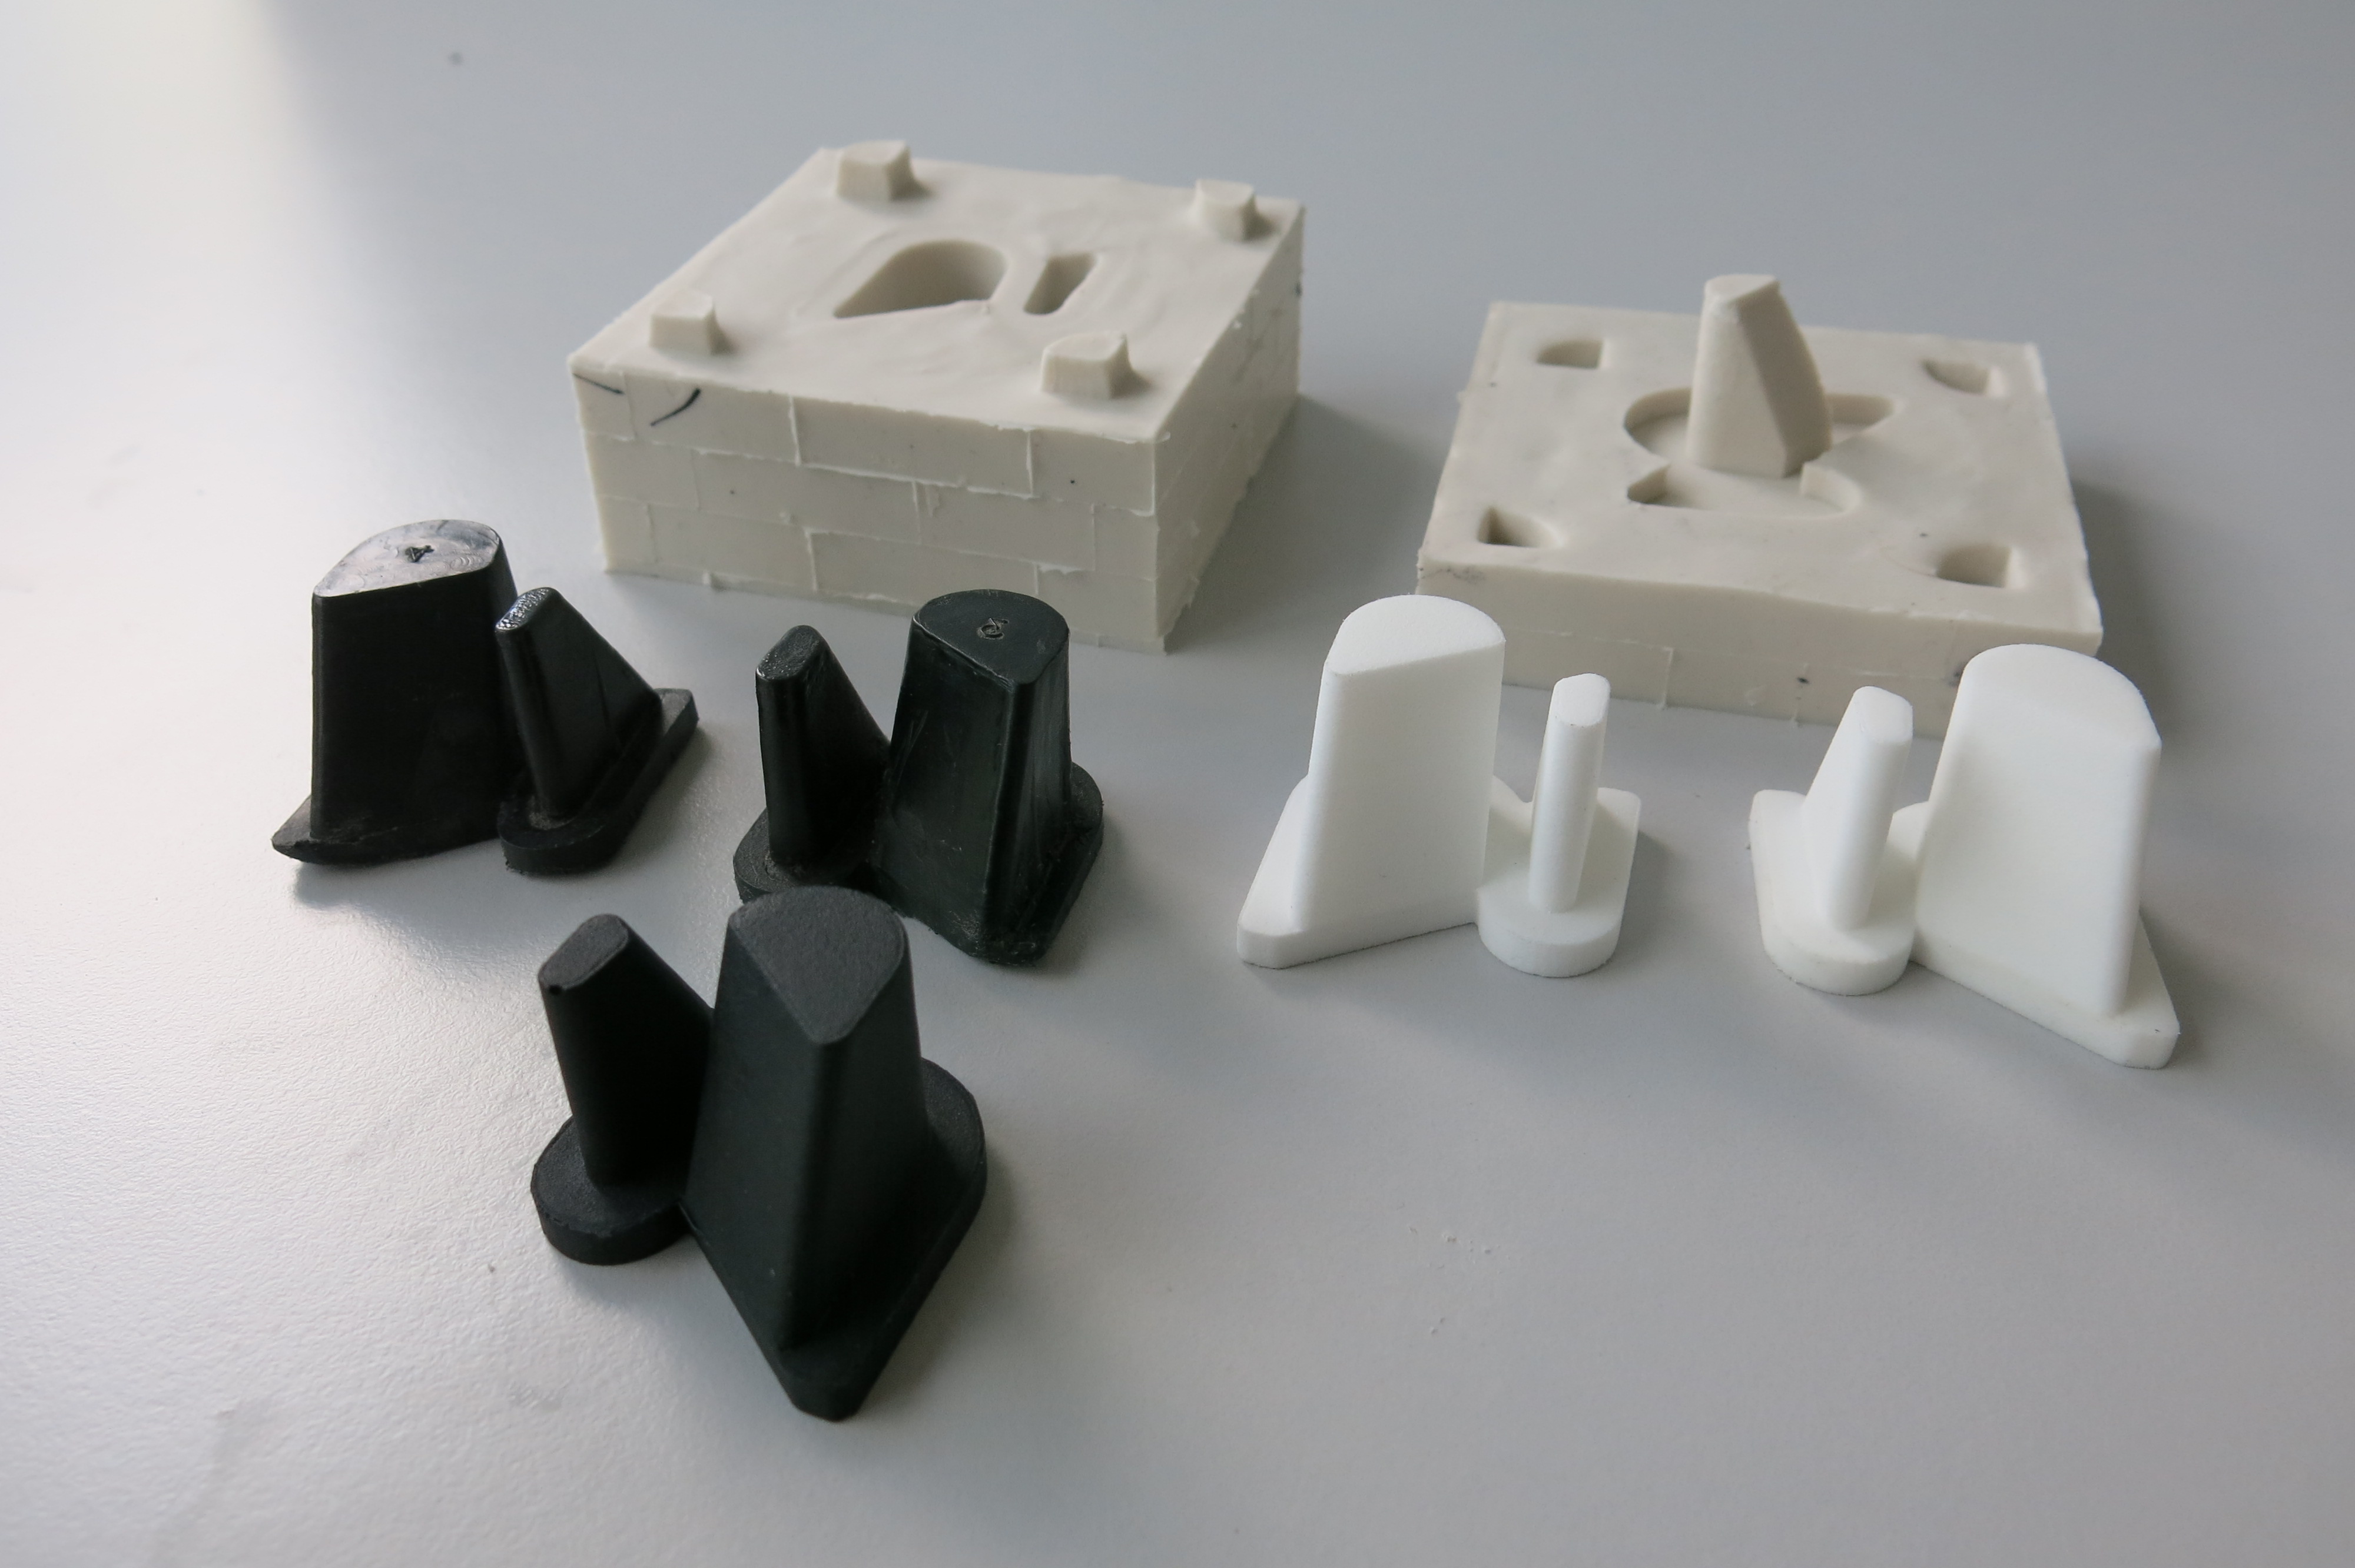 Sky Hilsen Plateau Learn how to create a basic mold using a 3D printed shape